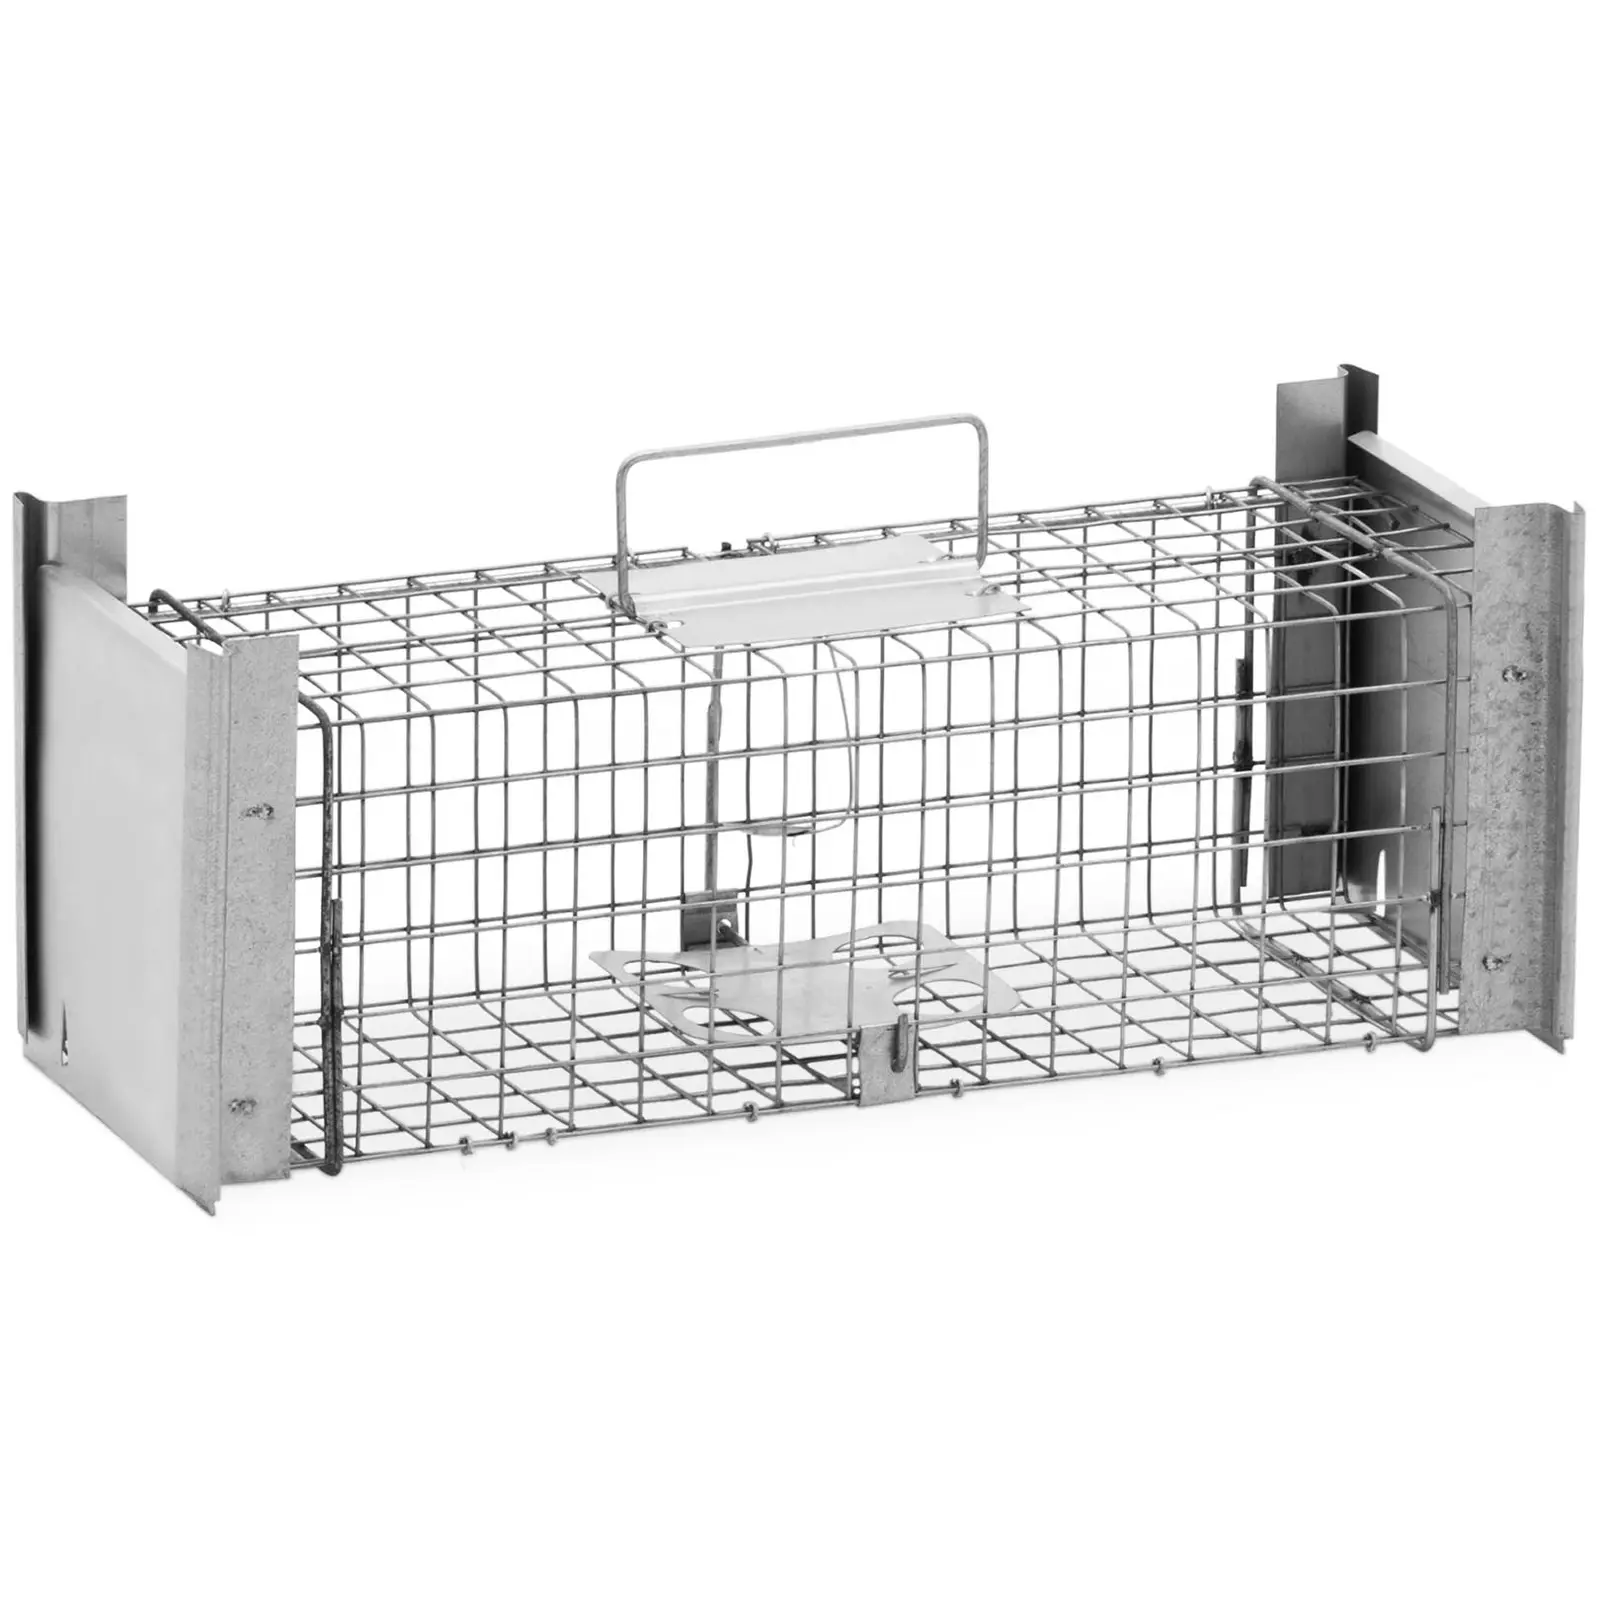 Humane Mouse Trap - 500 x 190 x 200 mm - Grid size: 25 x 25 mm